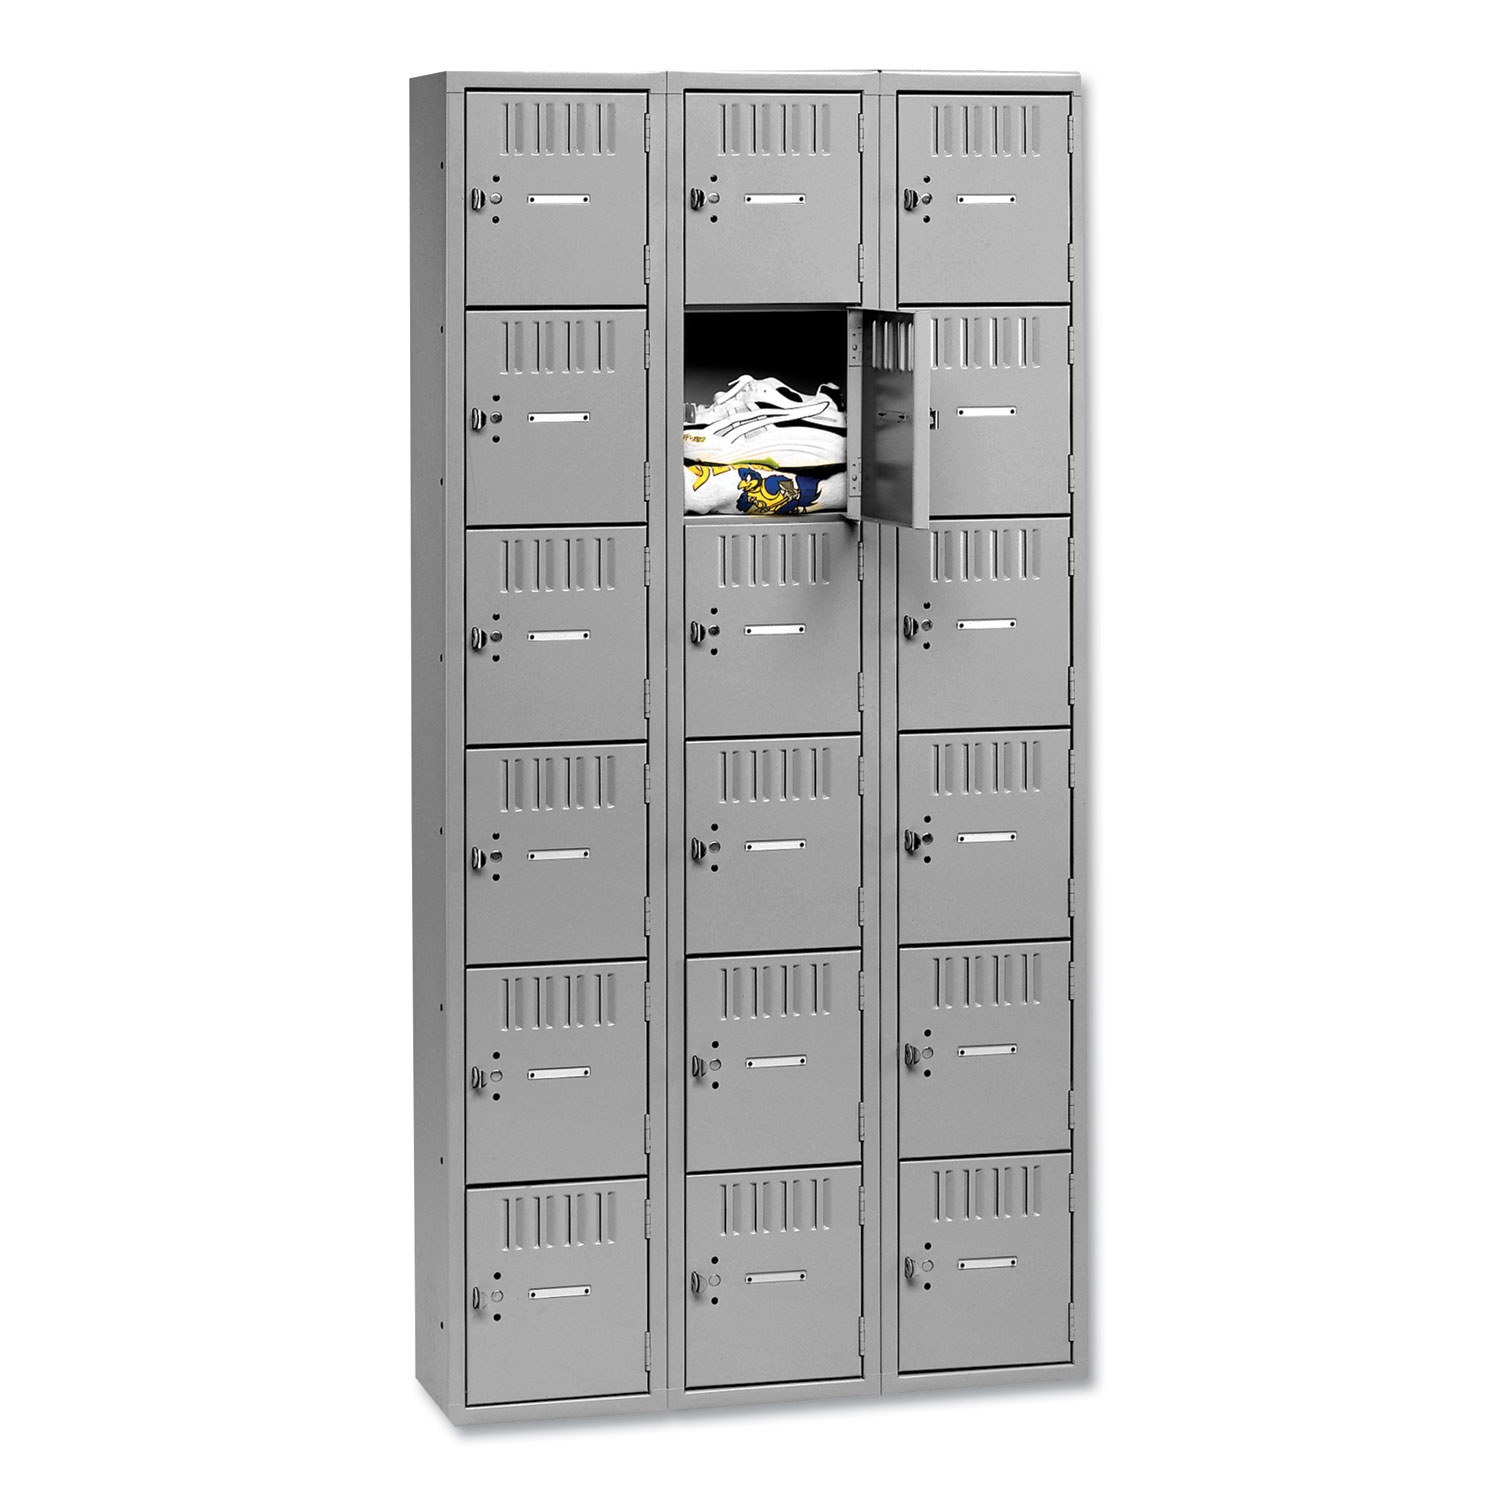 Global Storage Cabinet 36 W x 18 D x 72H - Black